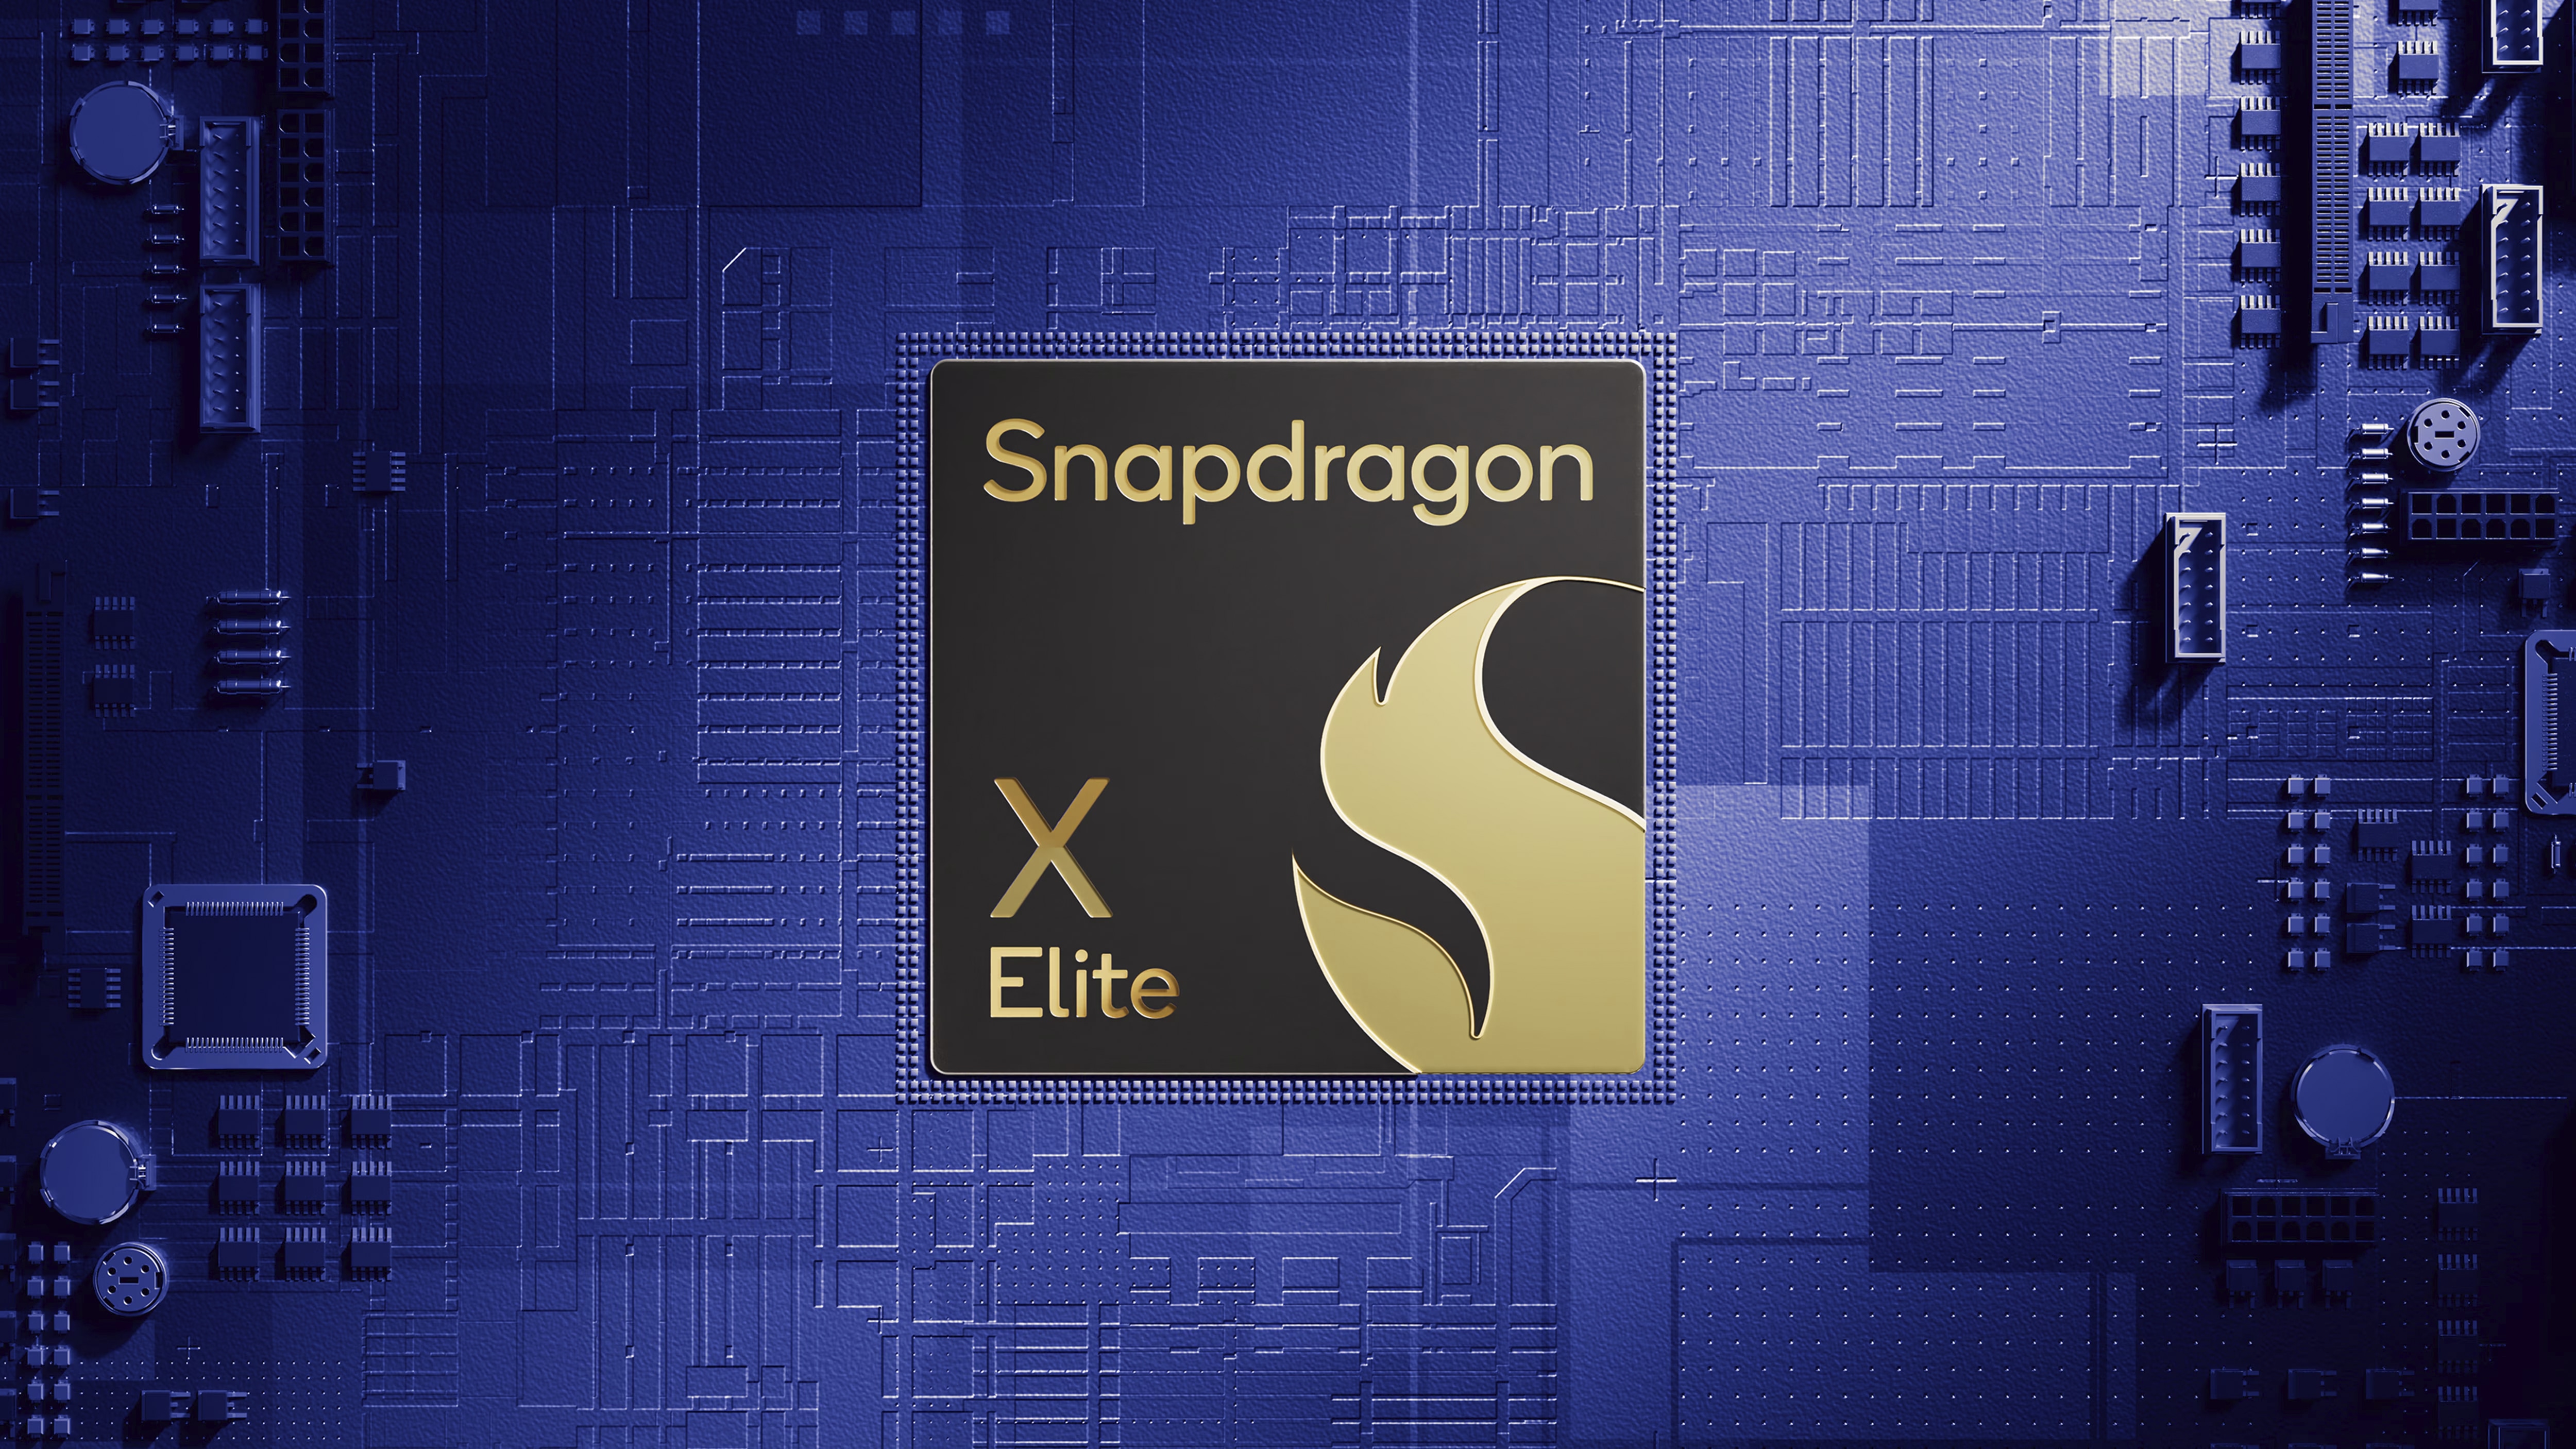 Rendering of Snapdragon X Elite chip. 